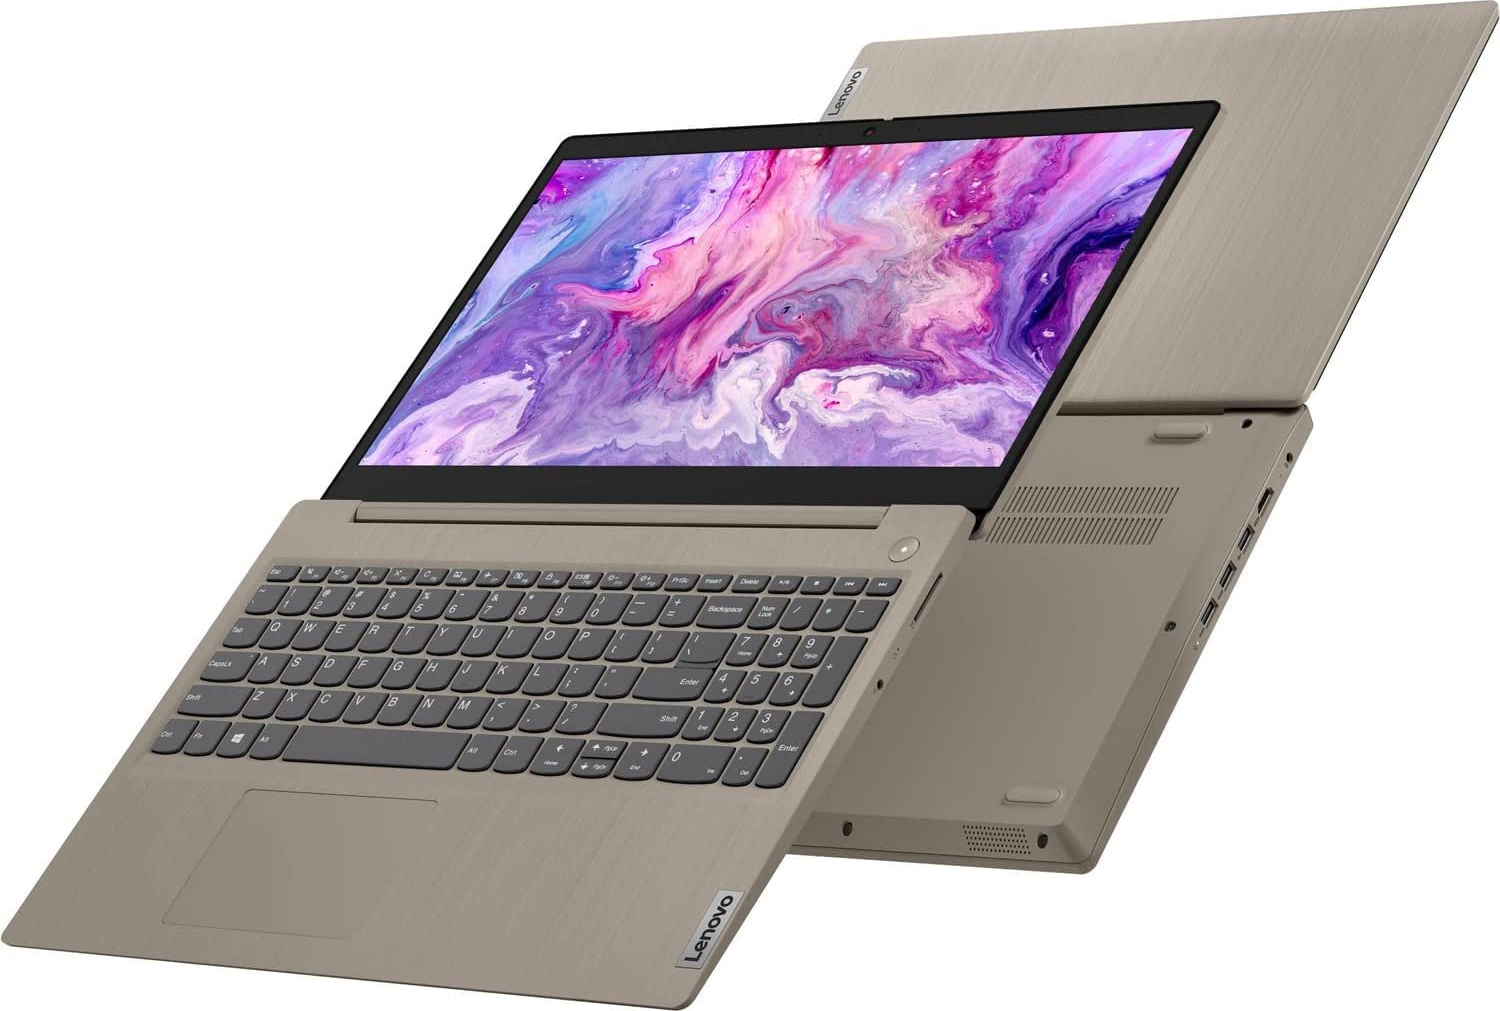 2022 Newest Lenovo Ideapad 3 Laptop, 15.6" HD Touchscreen, 11th Gen Intel Core i3-1115G4 Processor, 8GB DDR4 RAM, 256GB PCIe NVMe SSD, HDMI, Webcam, Wi-Fi 5, Bluetooth, Windows 11 Home, Almond